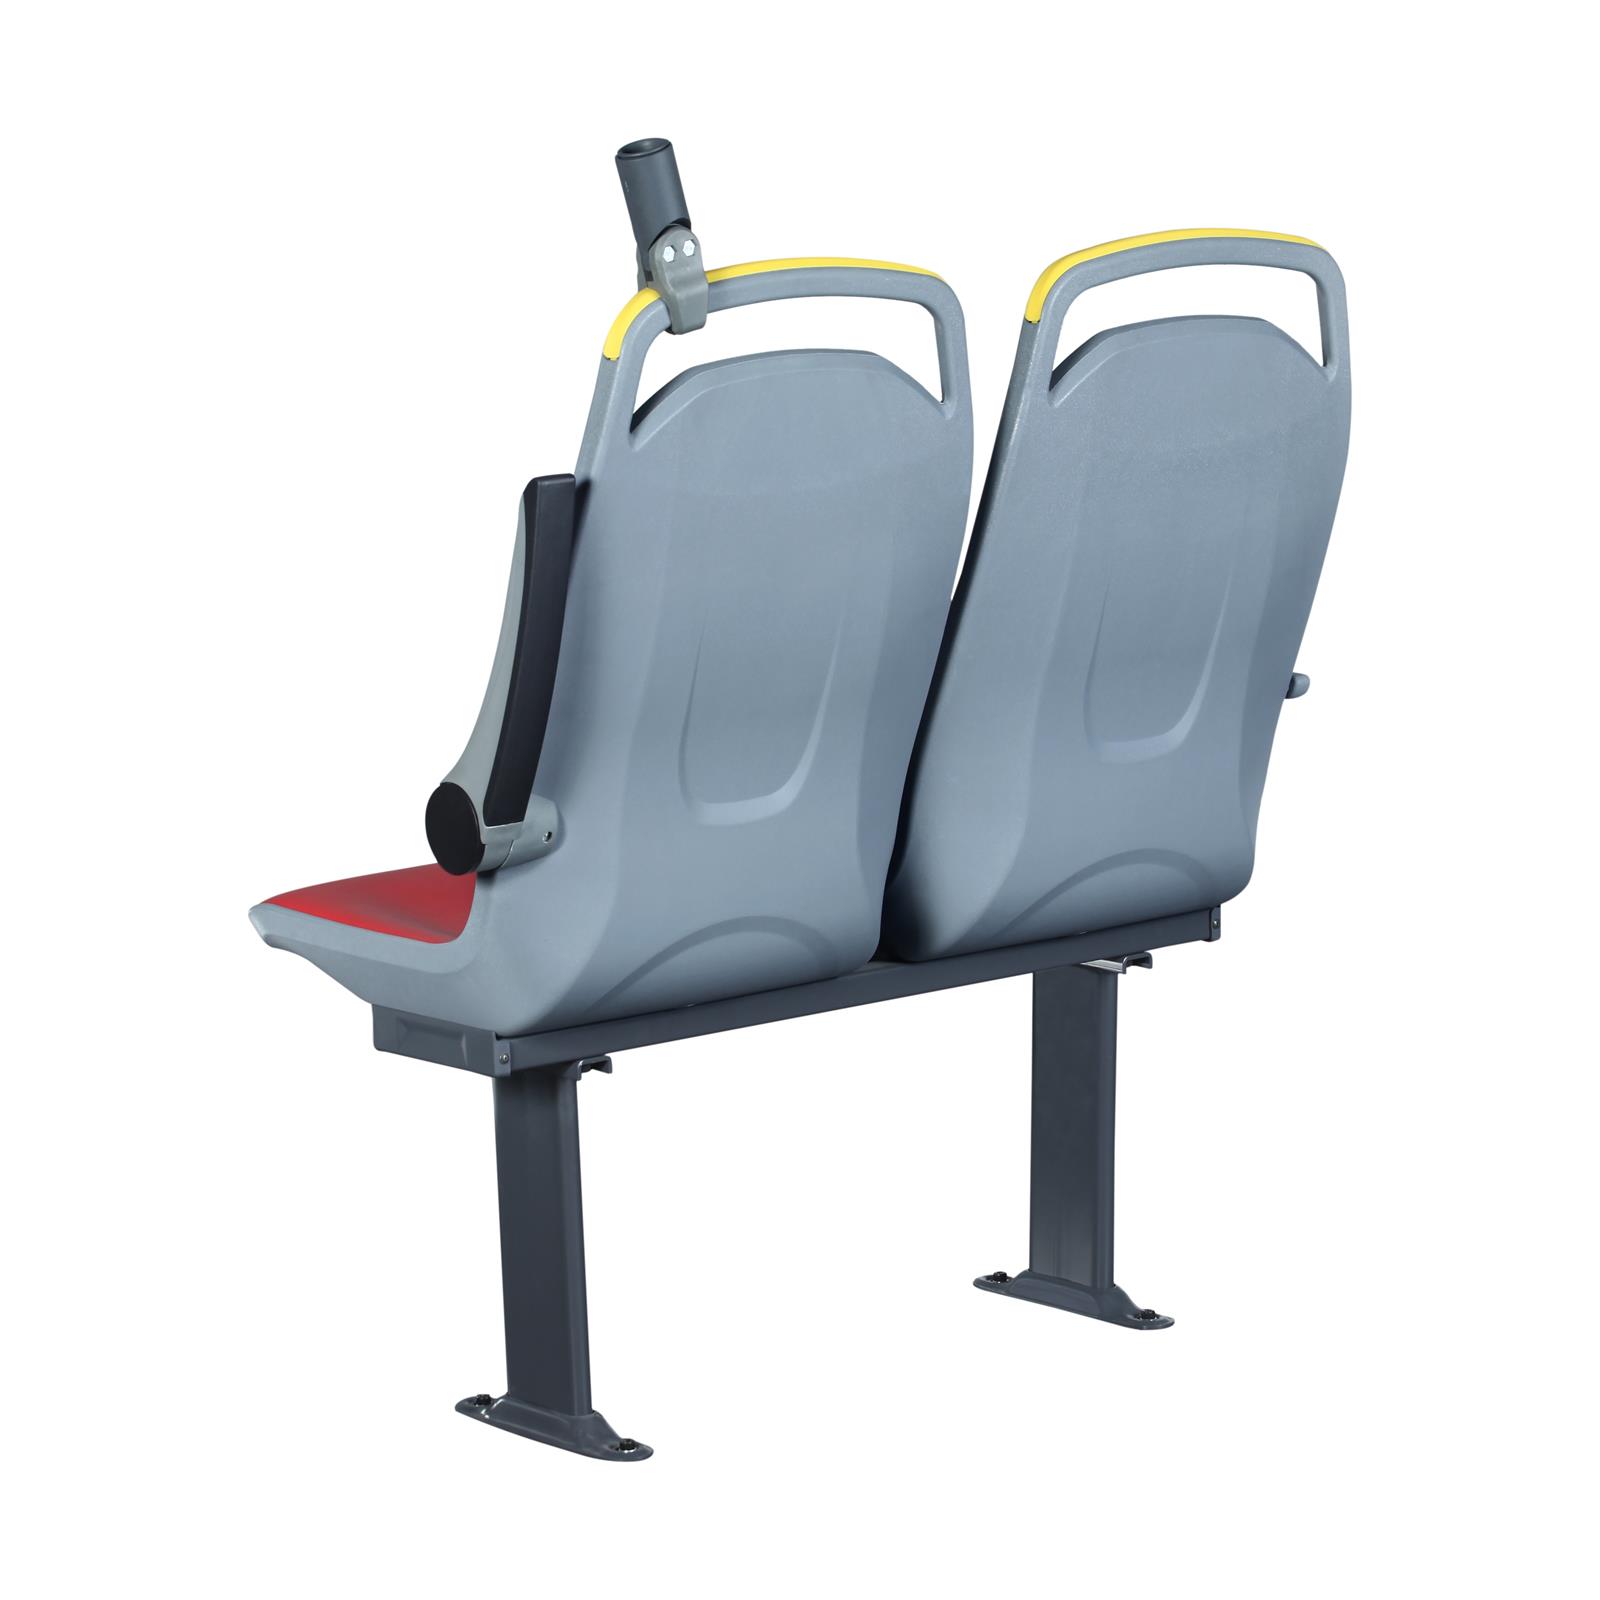 image shows Sege City 1440 Bus Seat